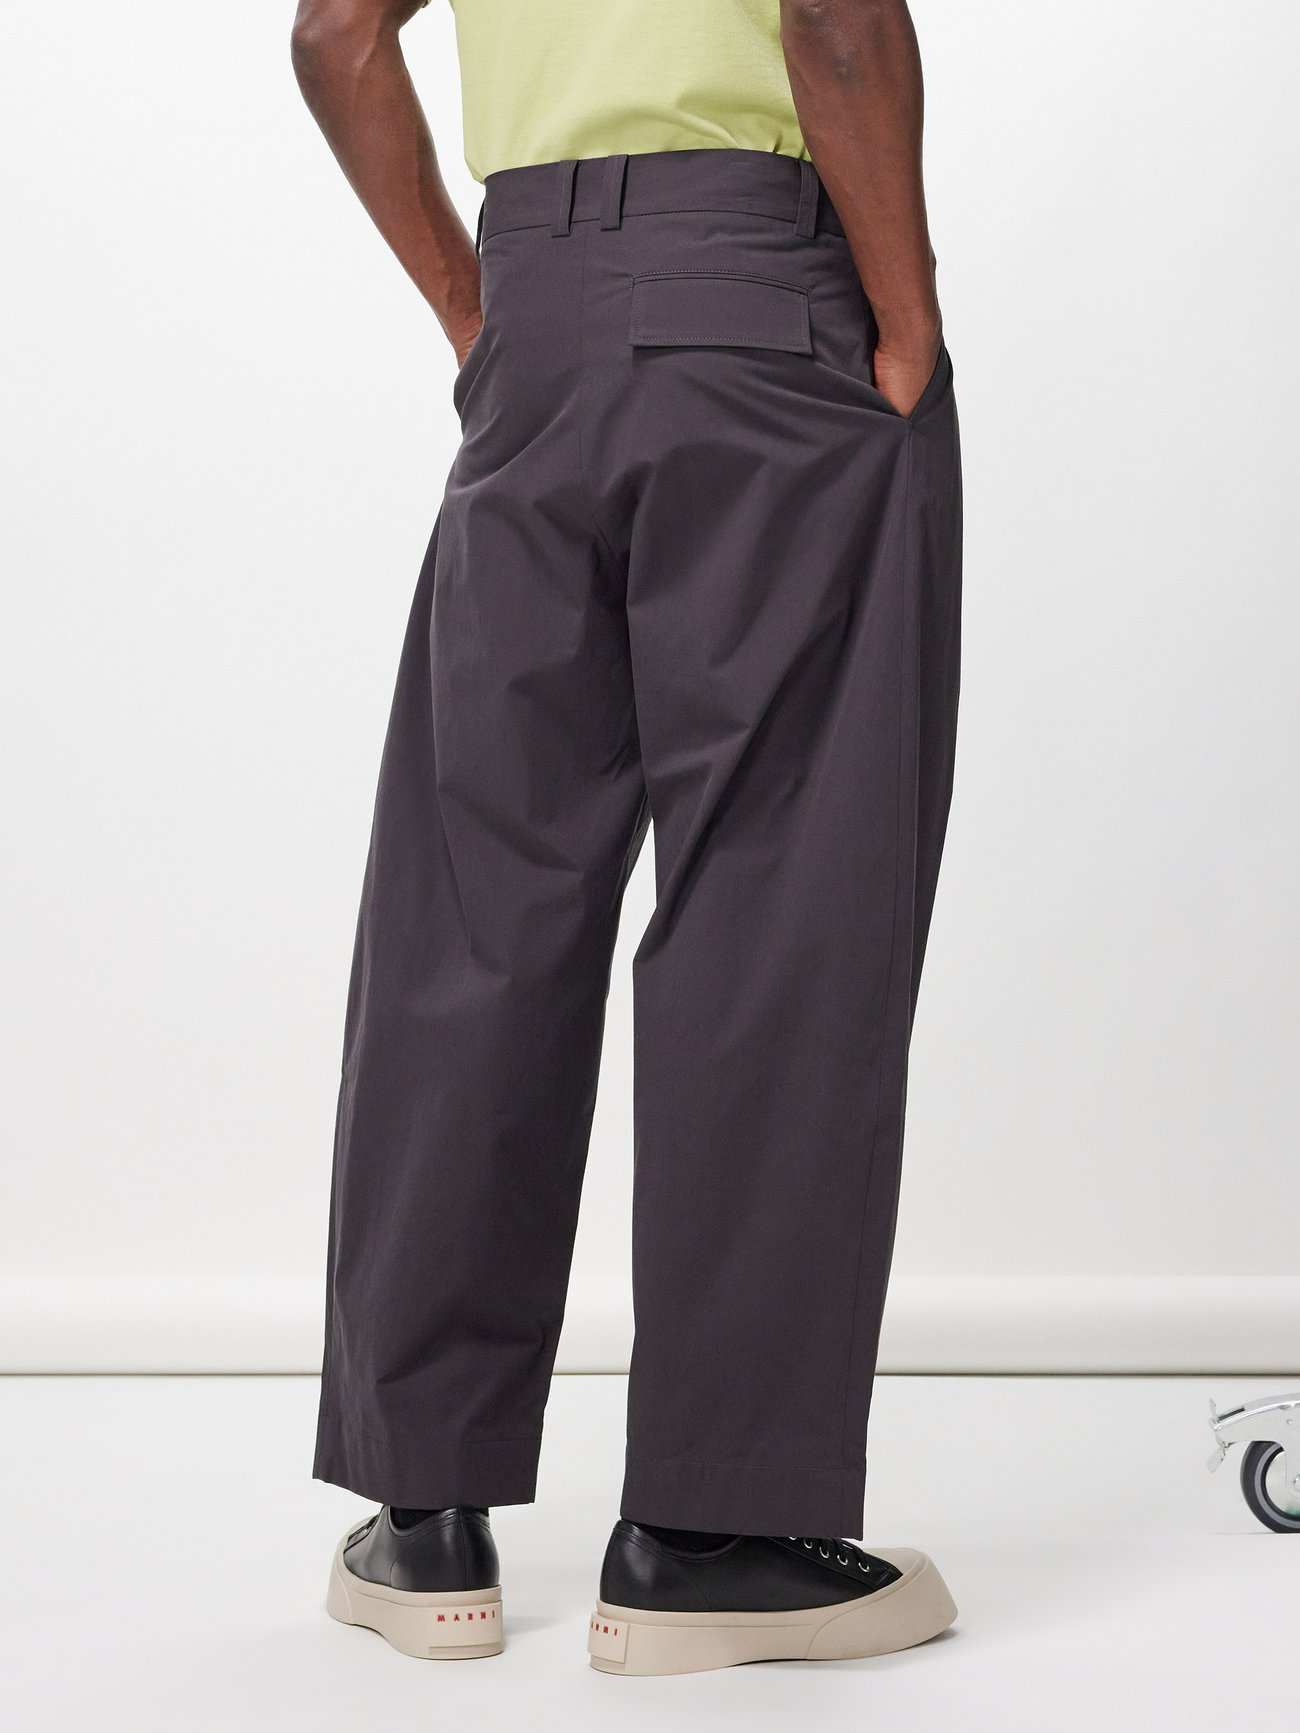 Grey Yale double-pleat cotton trousers | Studio Nicholson | MATCHES UK